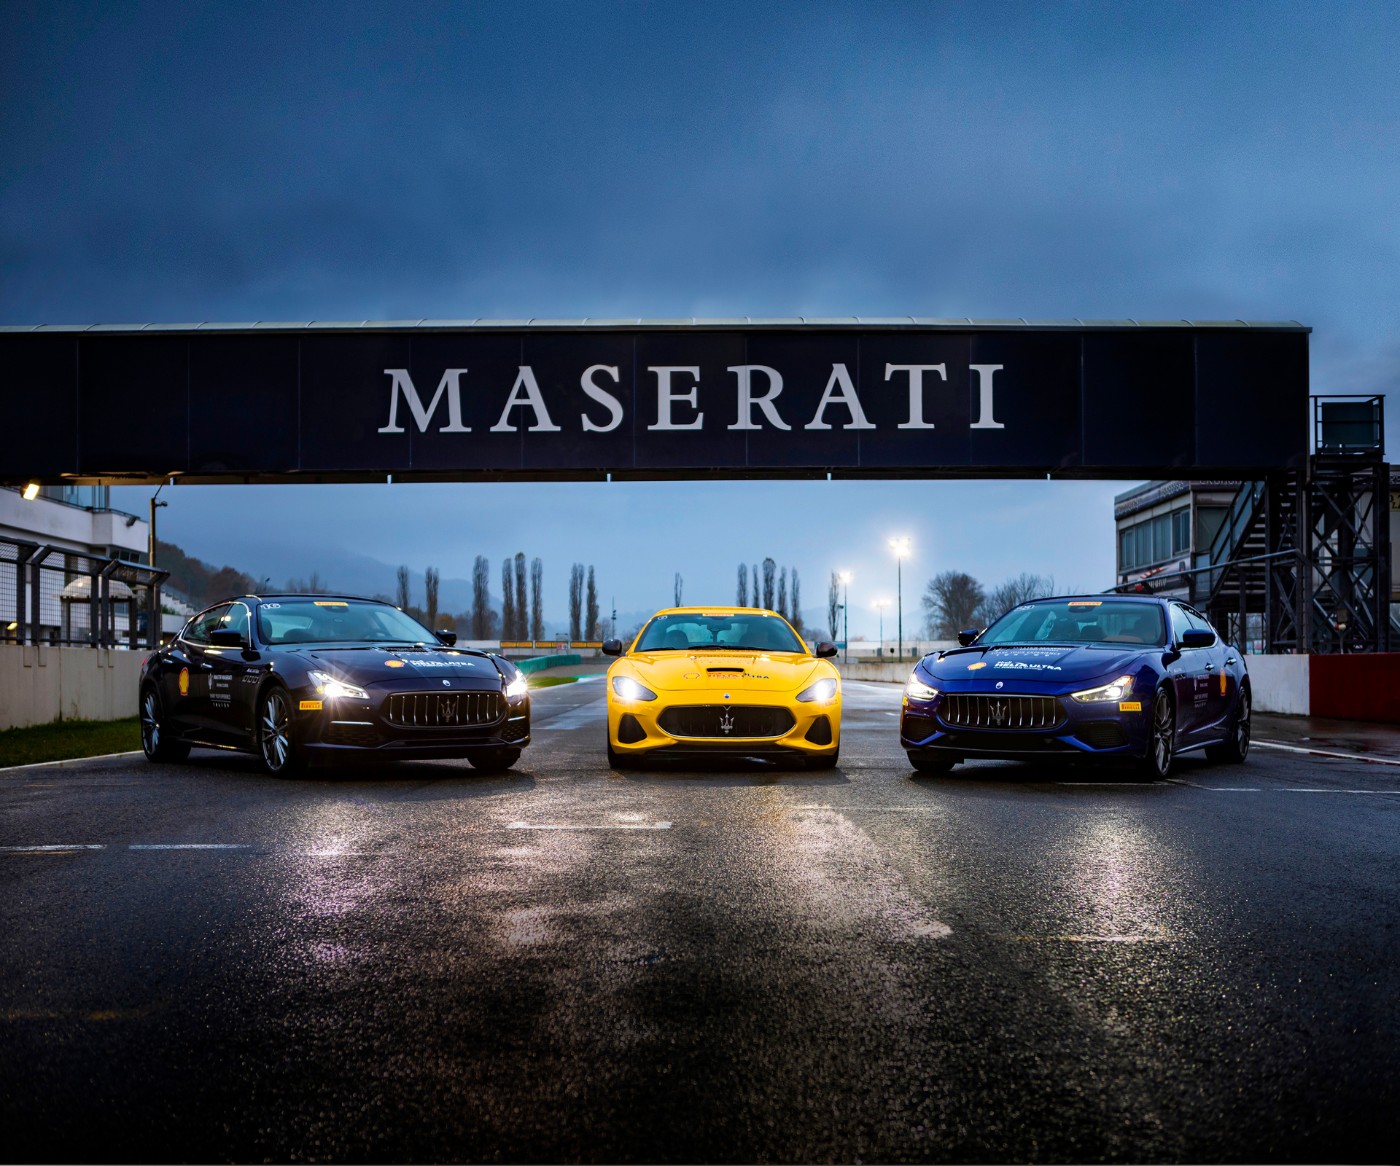 01_Master Maserati